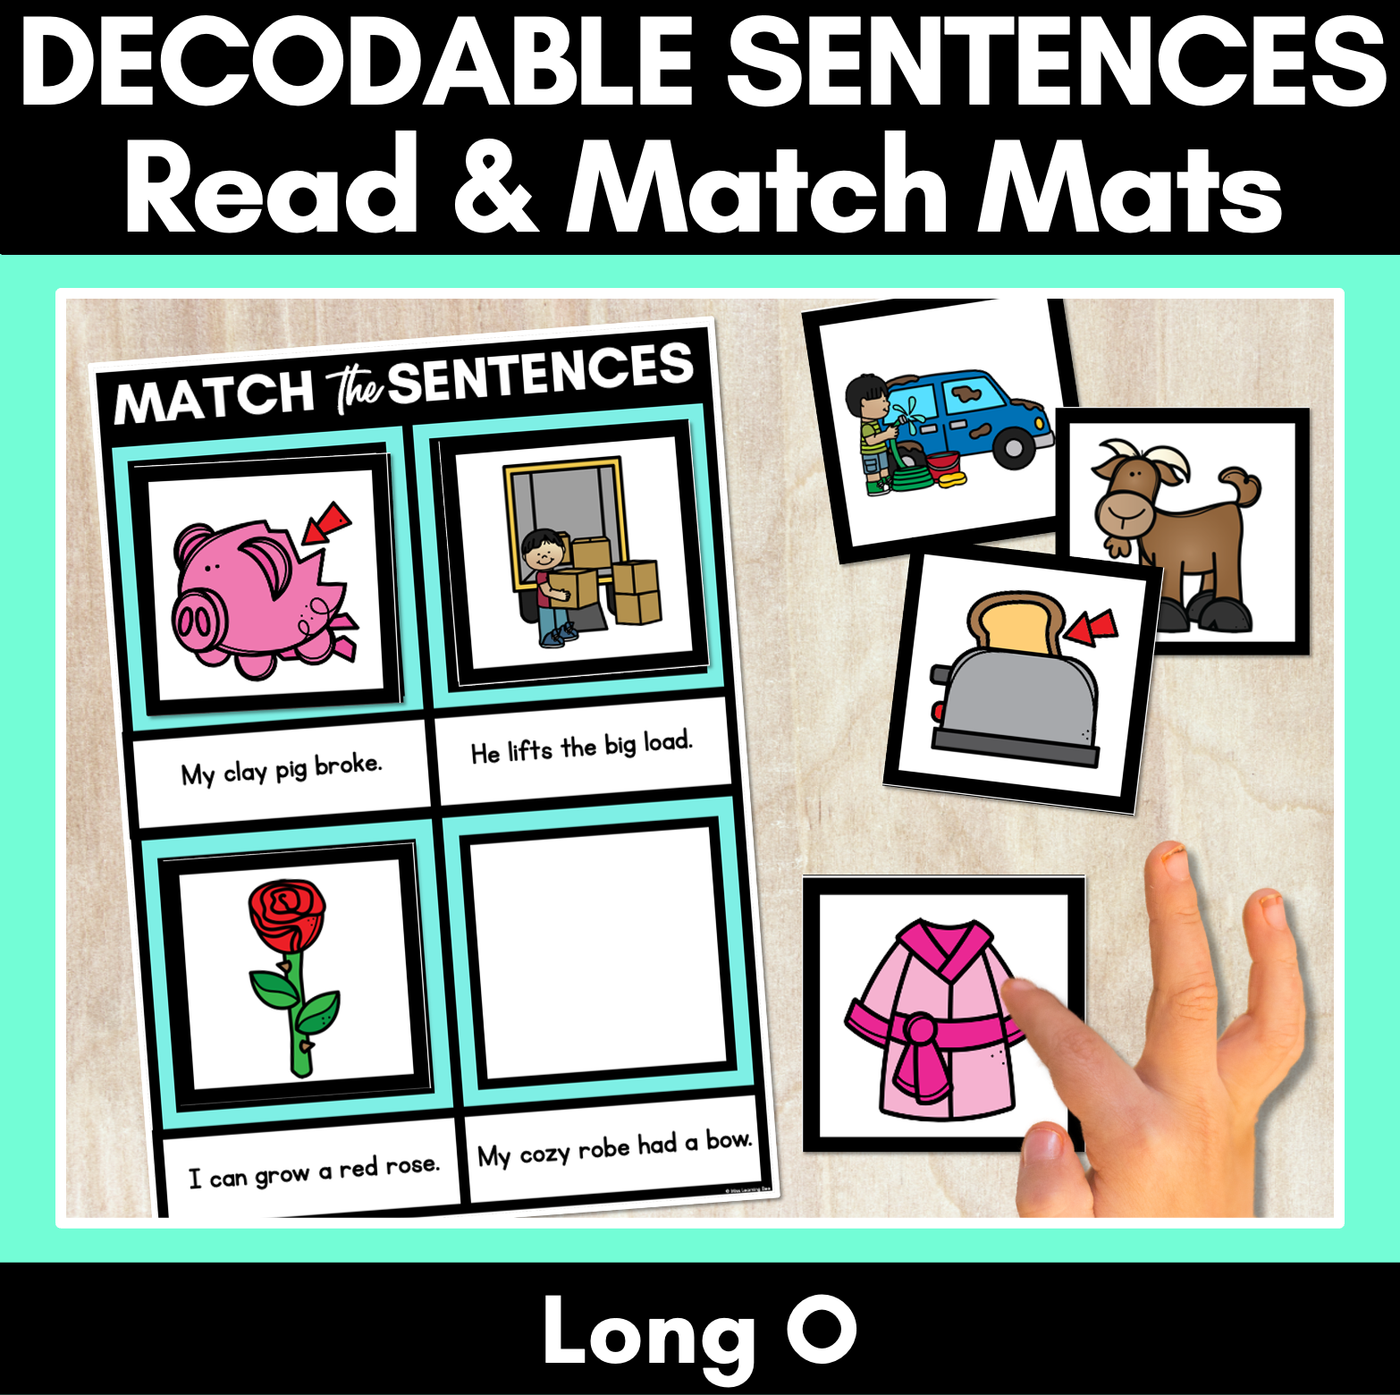 Long Vowel O Decodable Sentences Mats - Read & Match